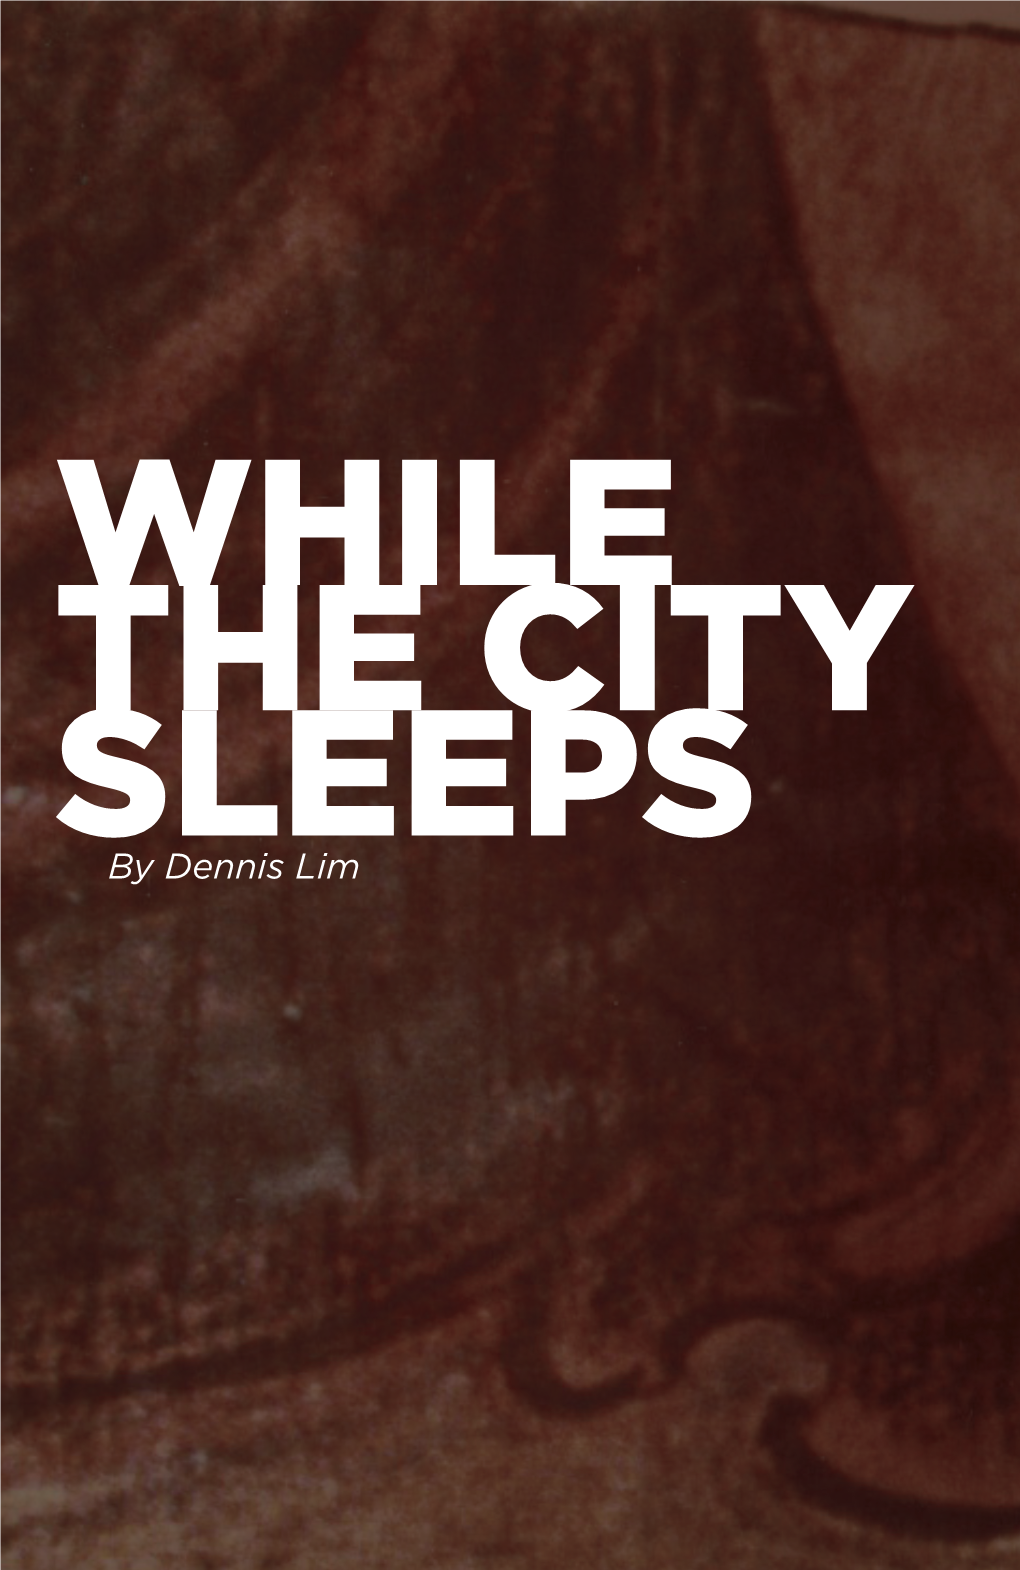 While the City Sleeps